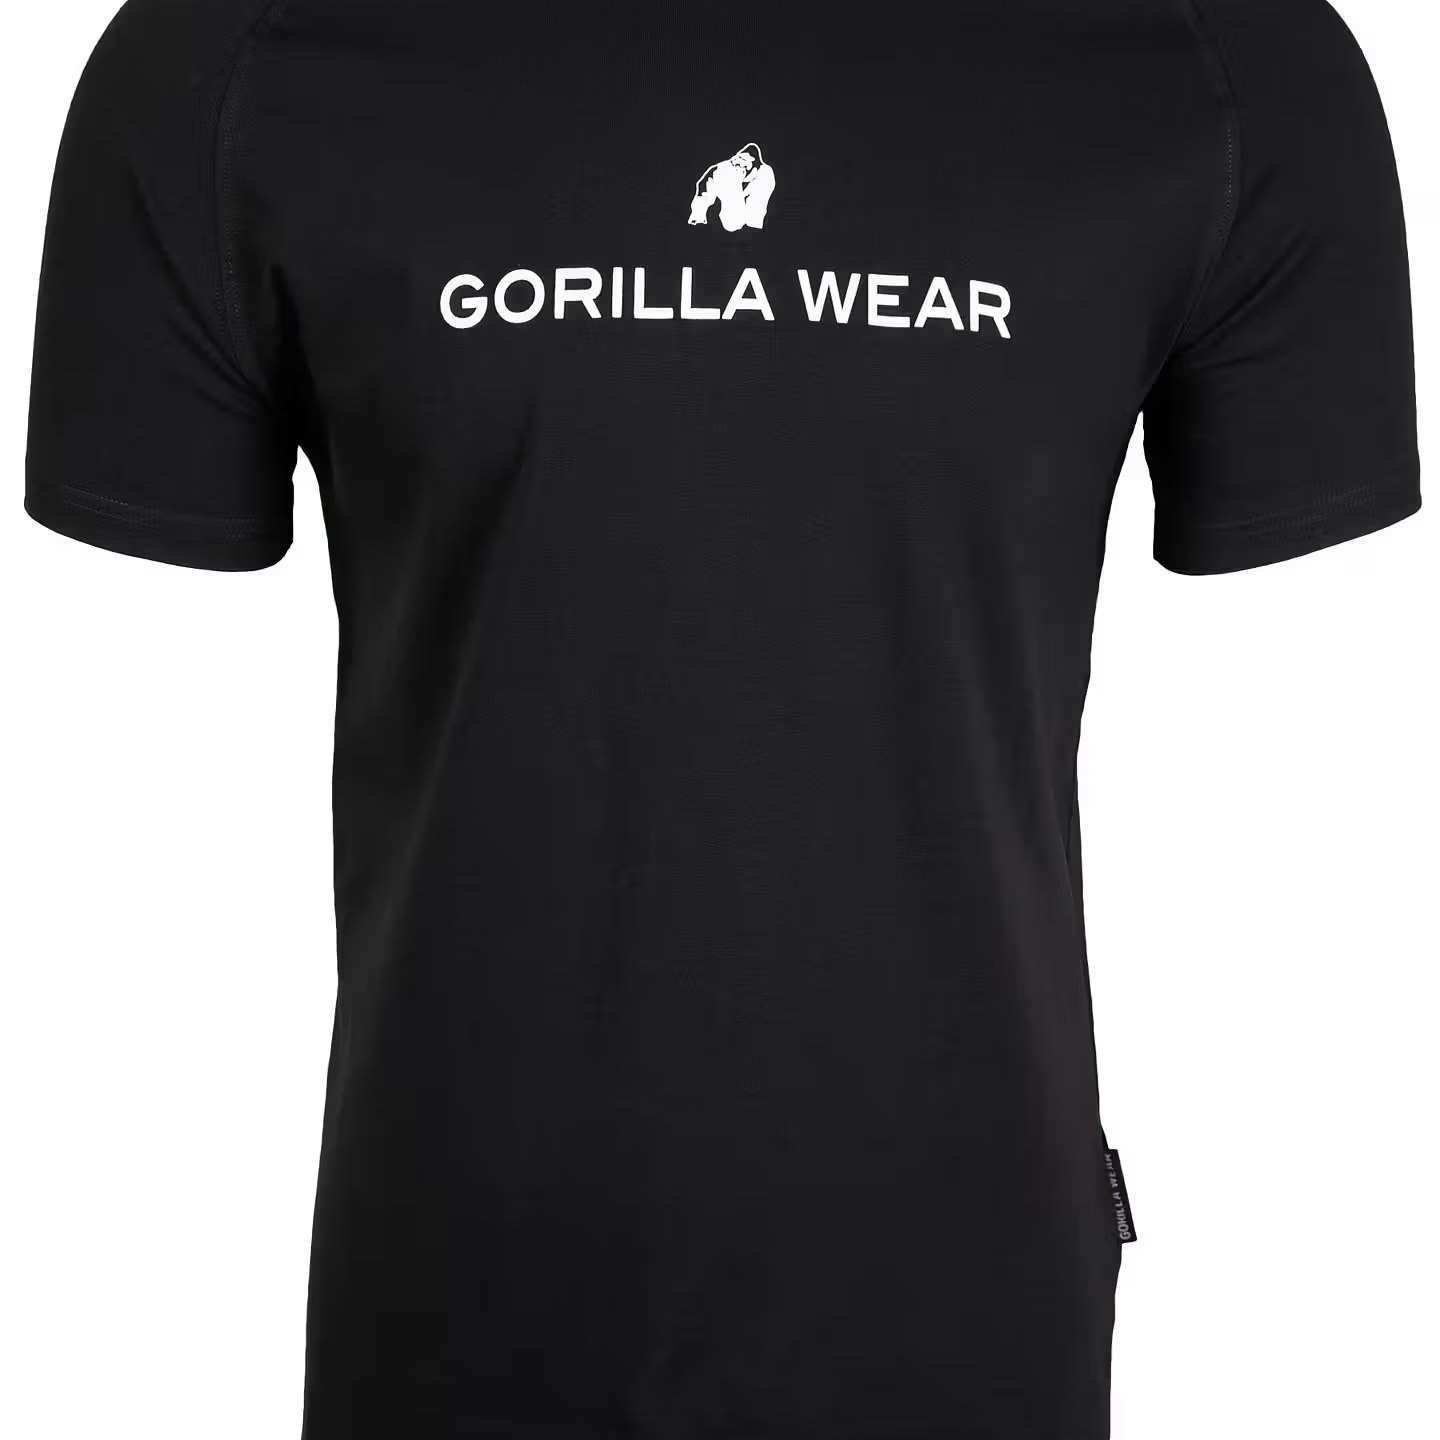 Gorilla wear - Davis T-shirt, black